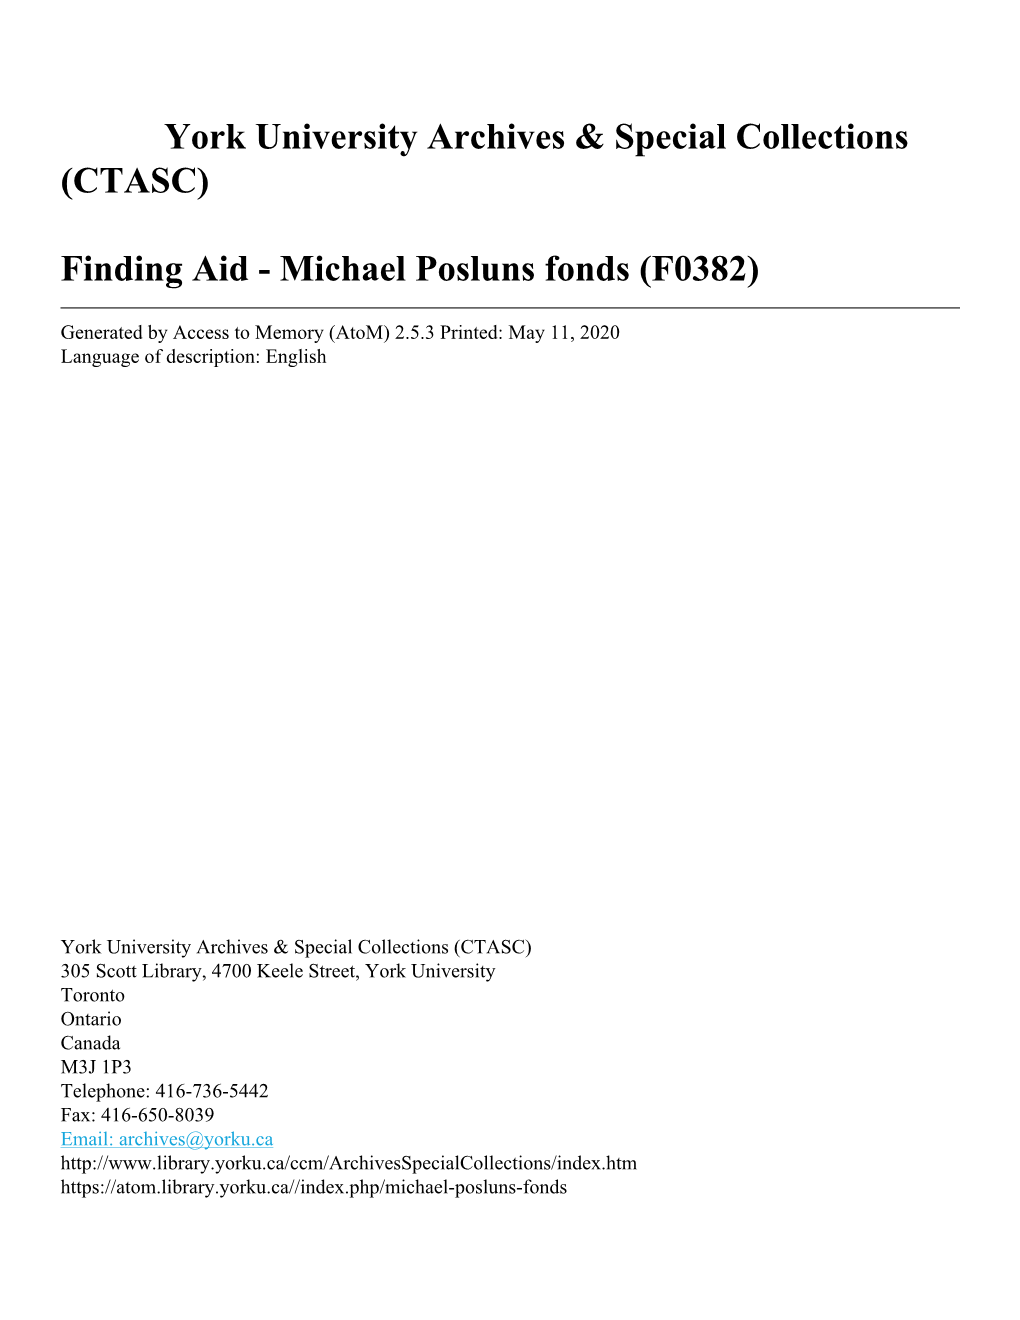 Michael Posluns Fonds (F0382)